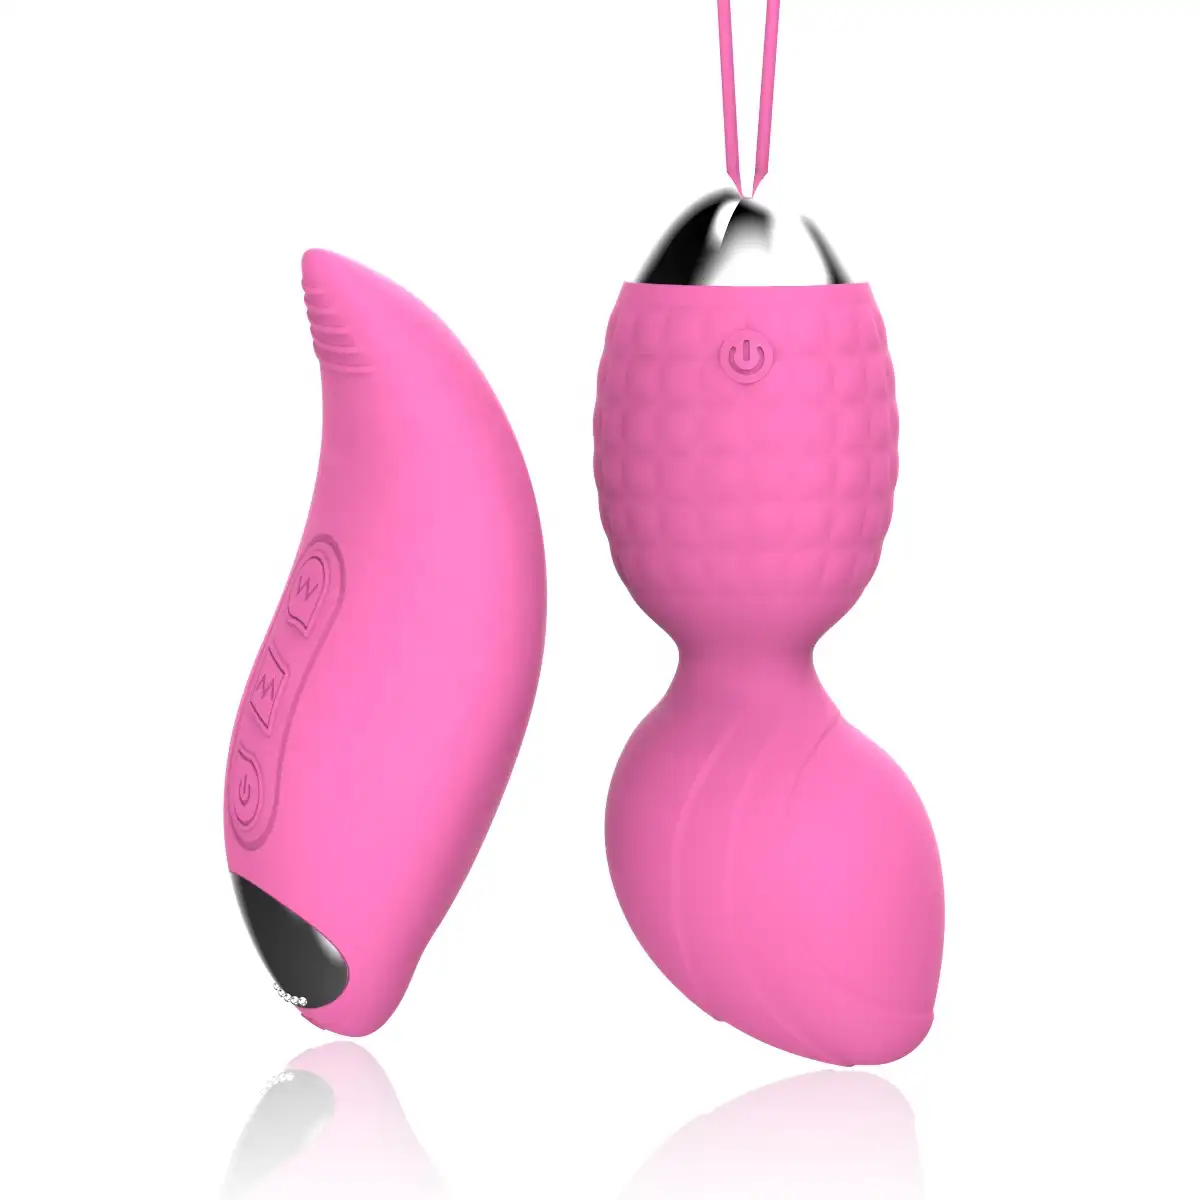 Wireless Vibrating Bullet Egg Vibrator Remote Control Clitoris Stimulator 10 Speed Vibration Love Egg for Women Couple Sex Toys